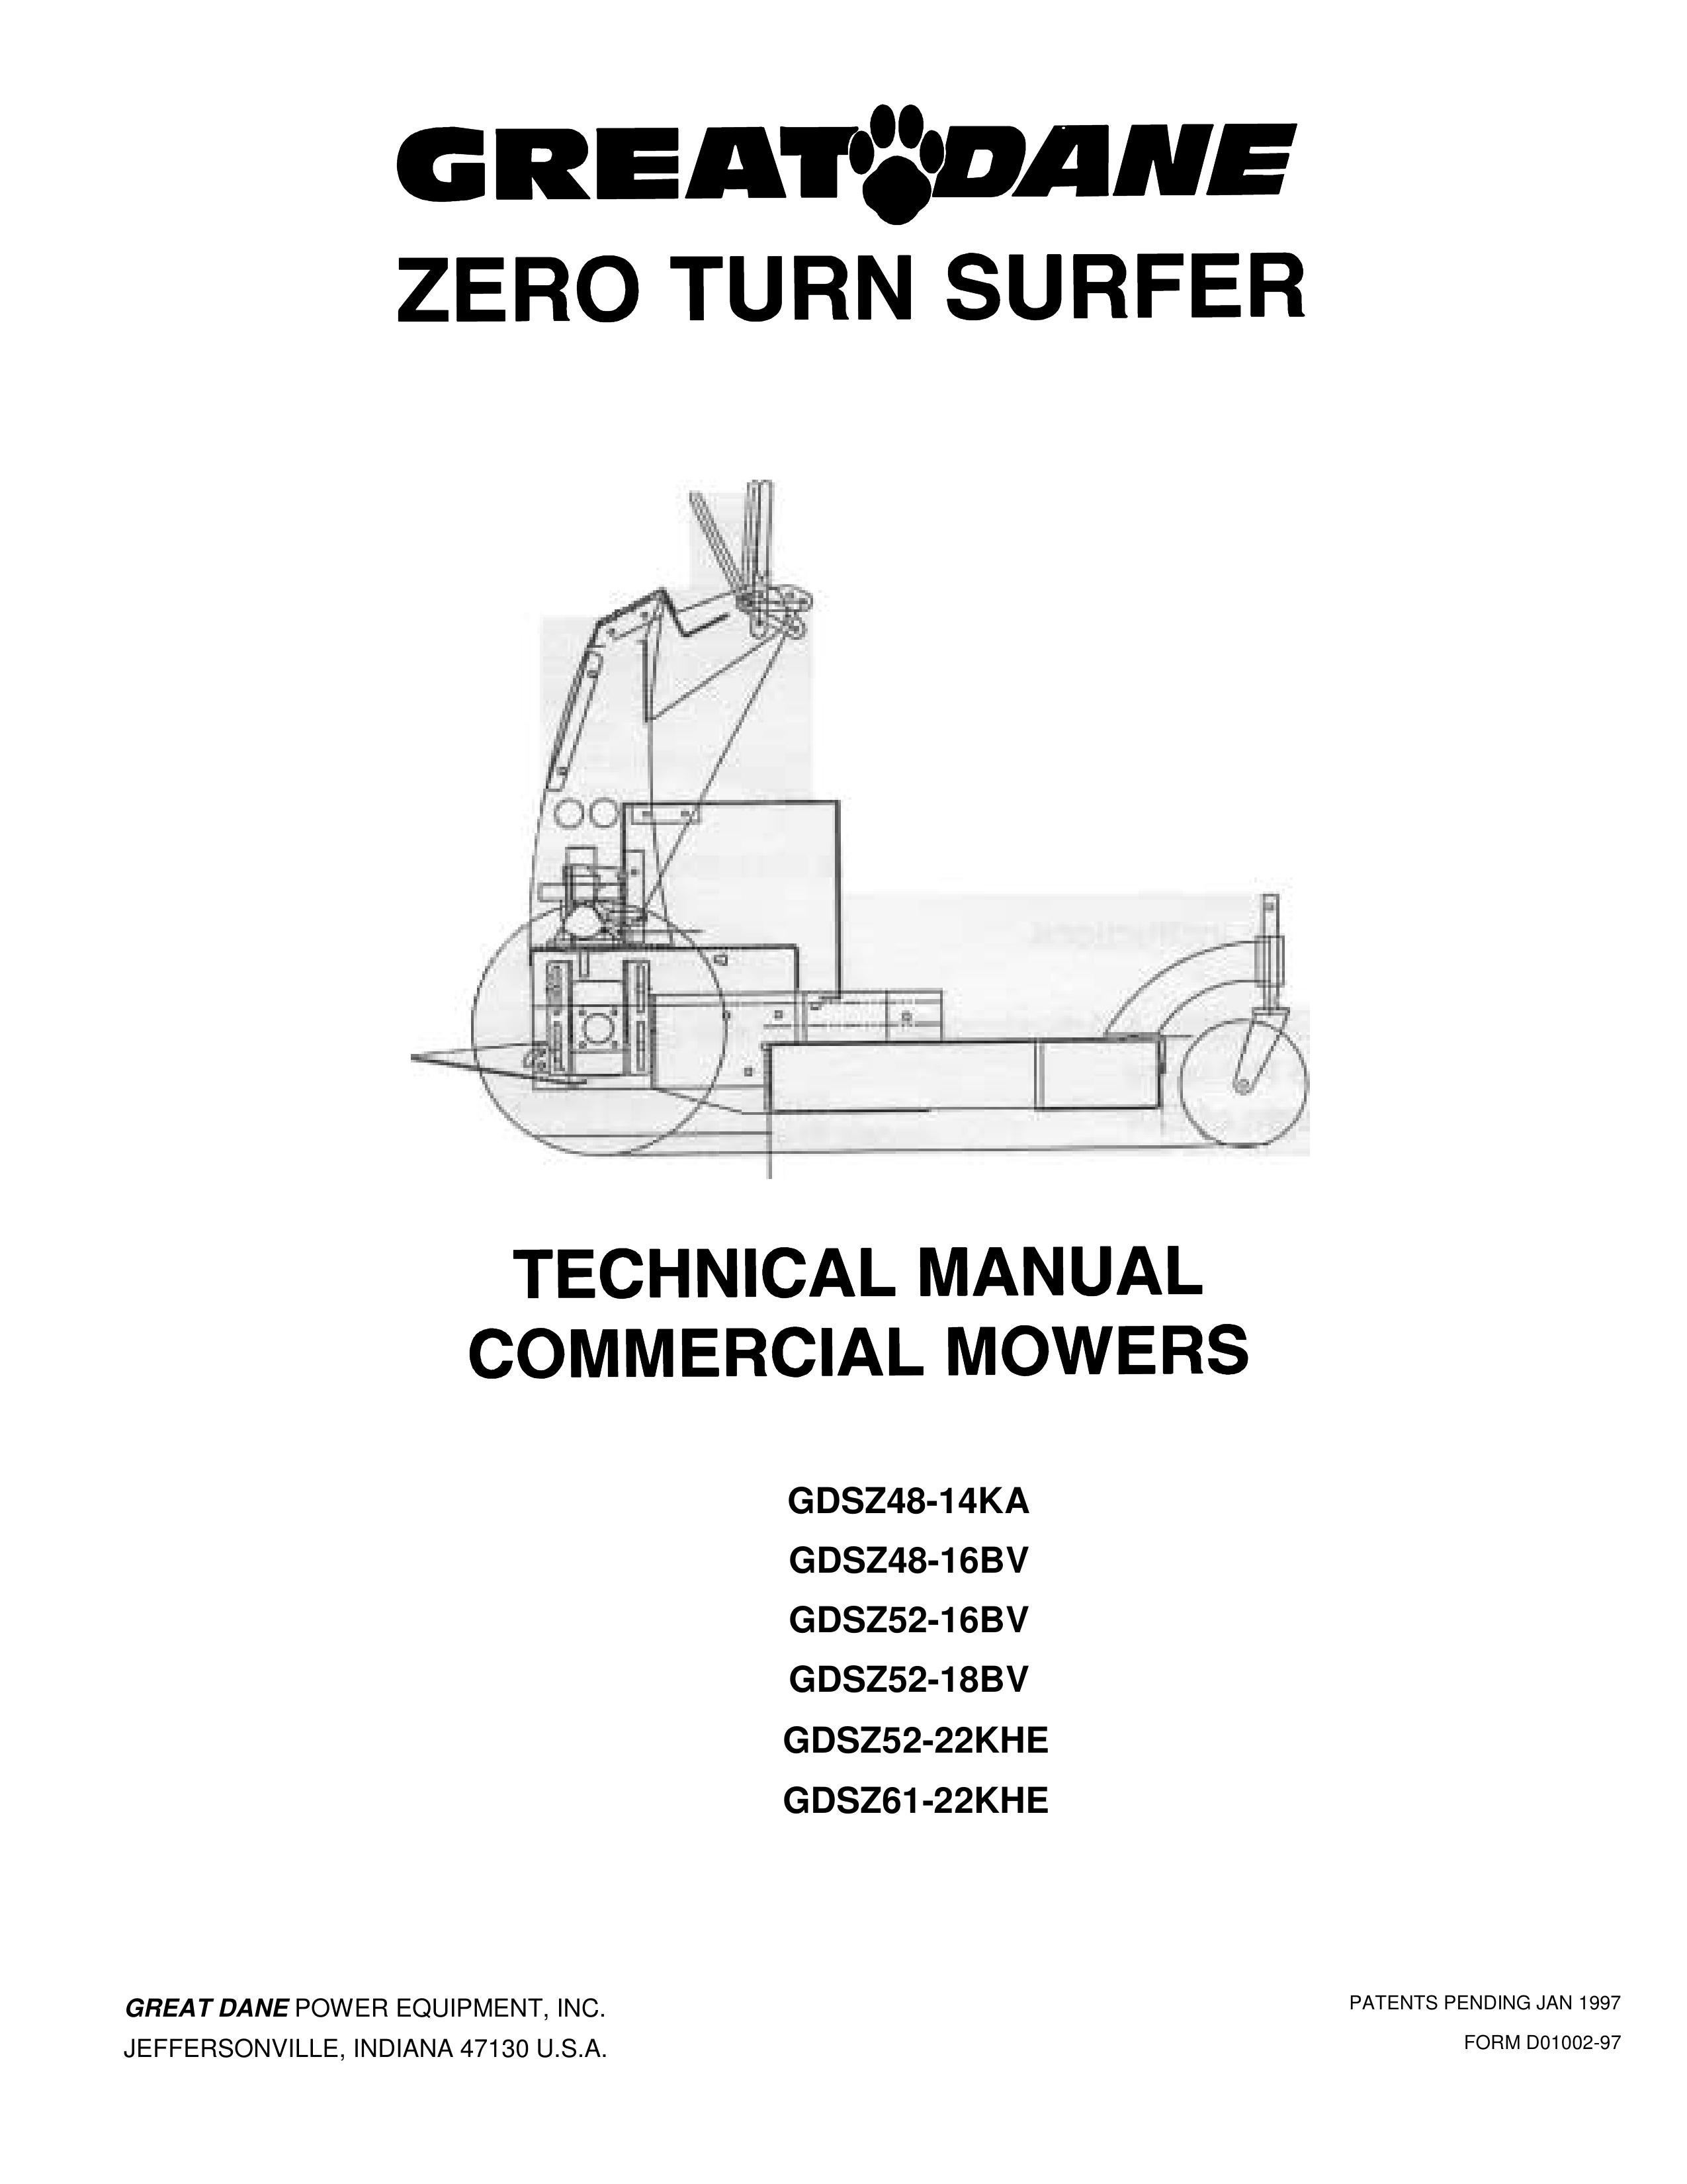 Great Dane GDSZ61-22KHE Lawn Mower User Manual